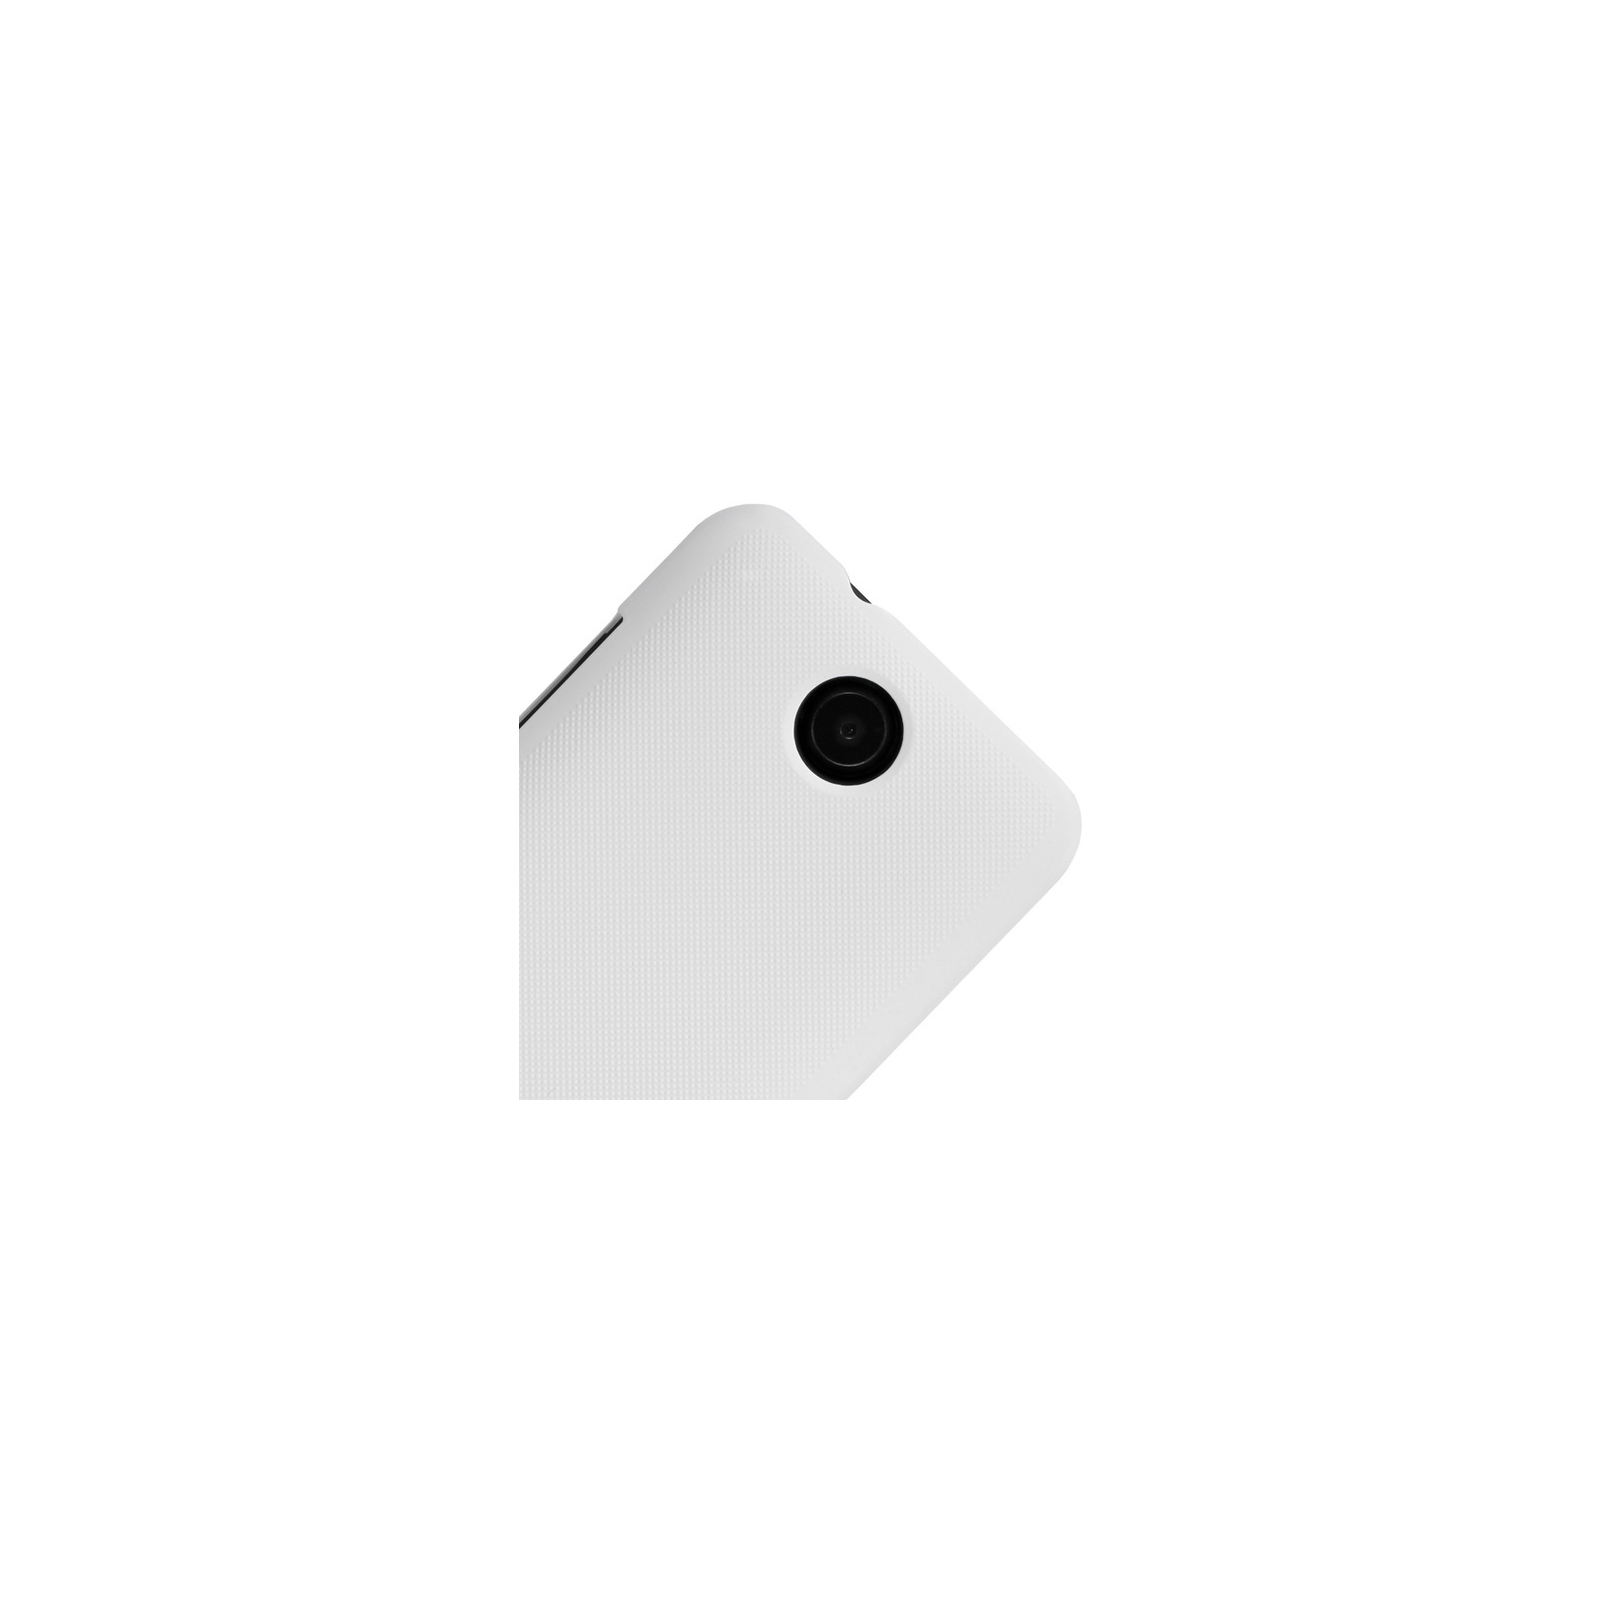 Чехол для мобильного телефона Nillkin для HTC Desire 300 /Super Frosted Shield/White (6100791) изображение 5